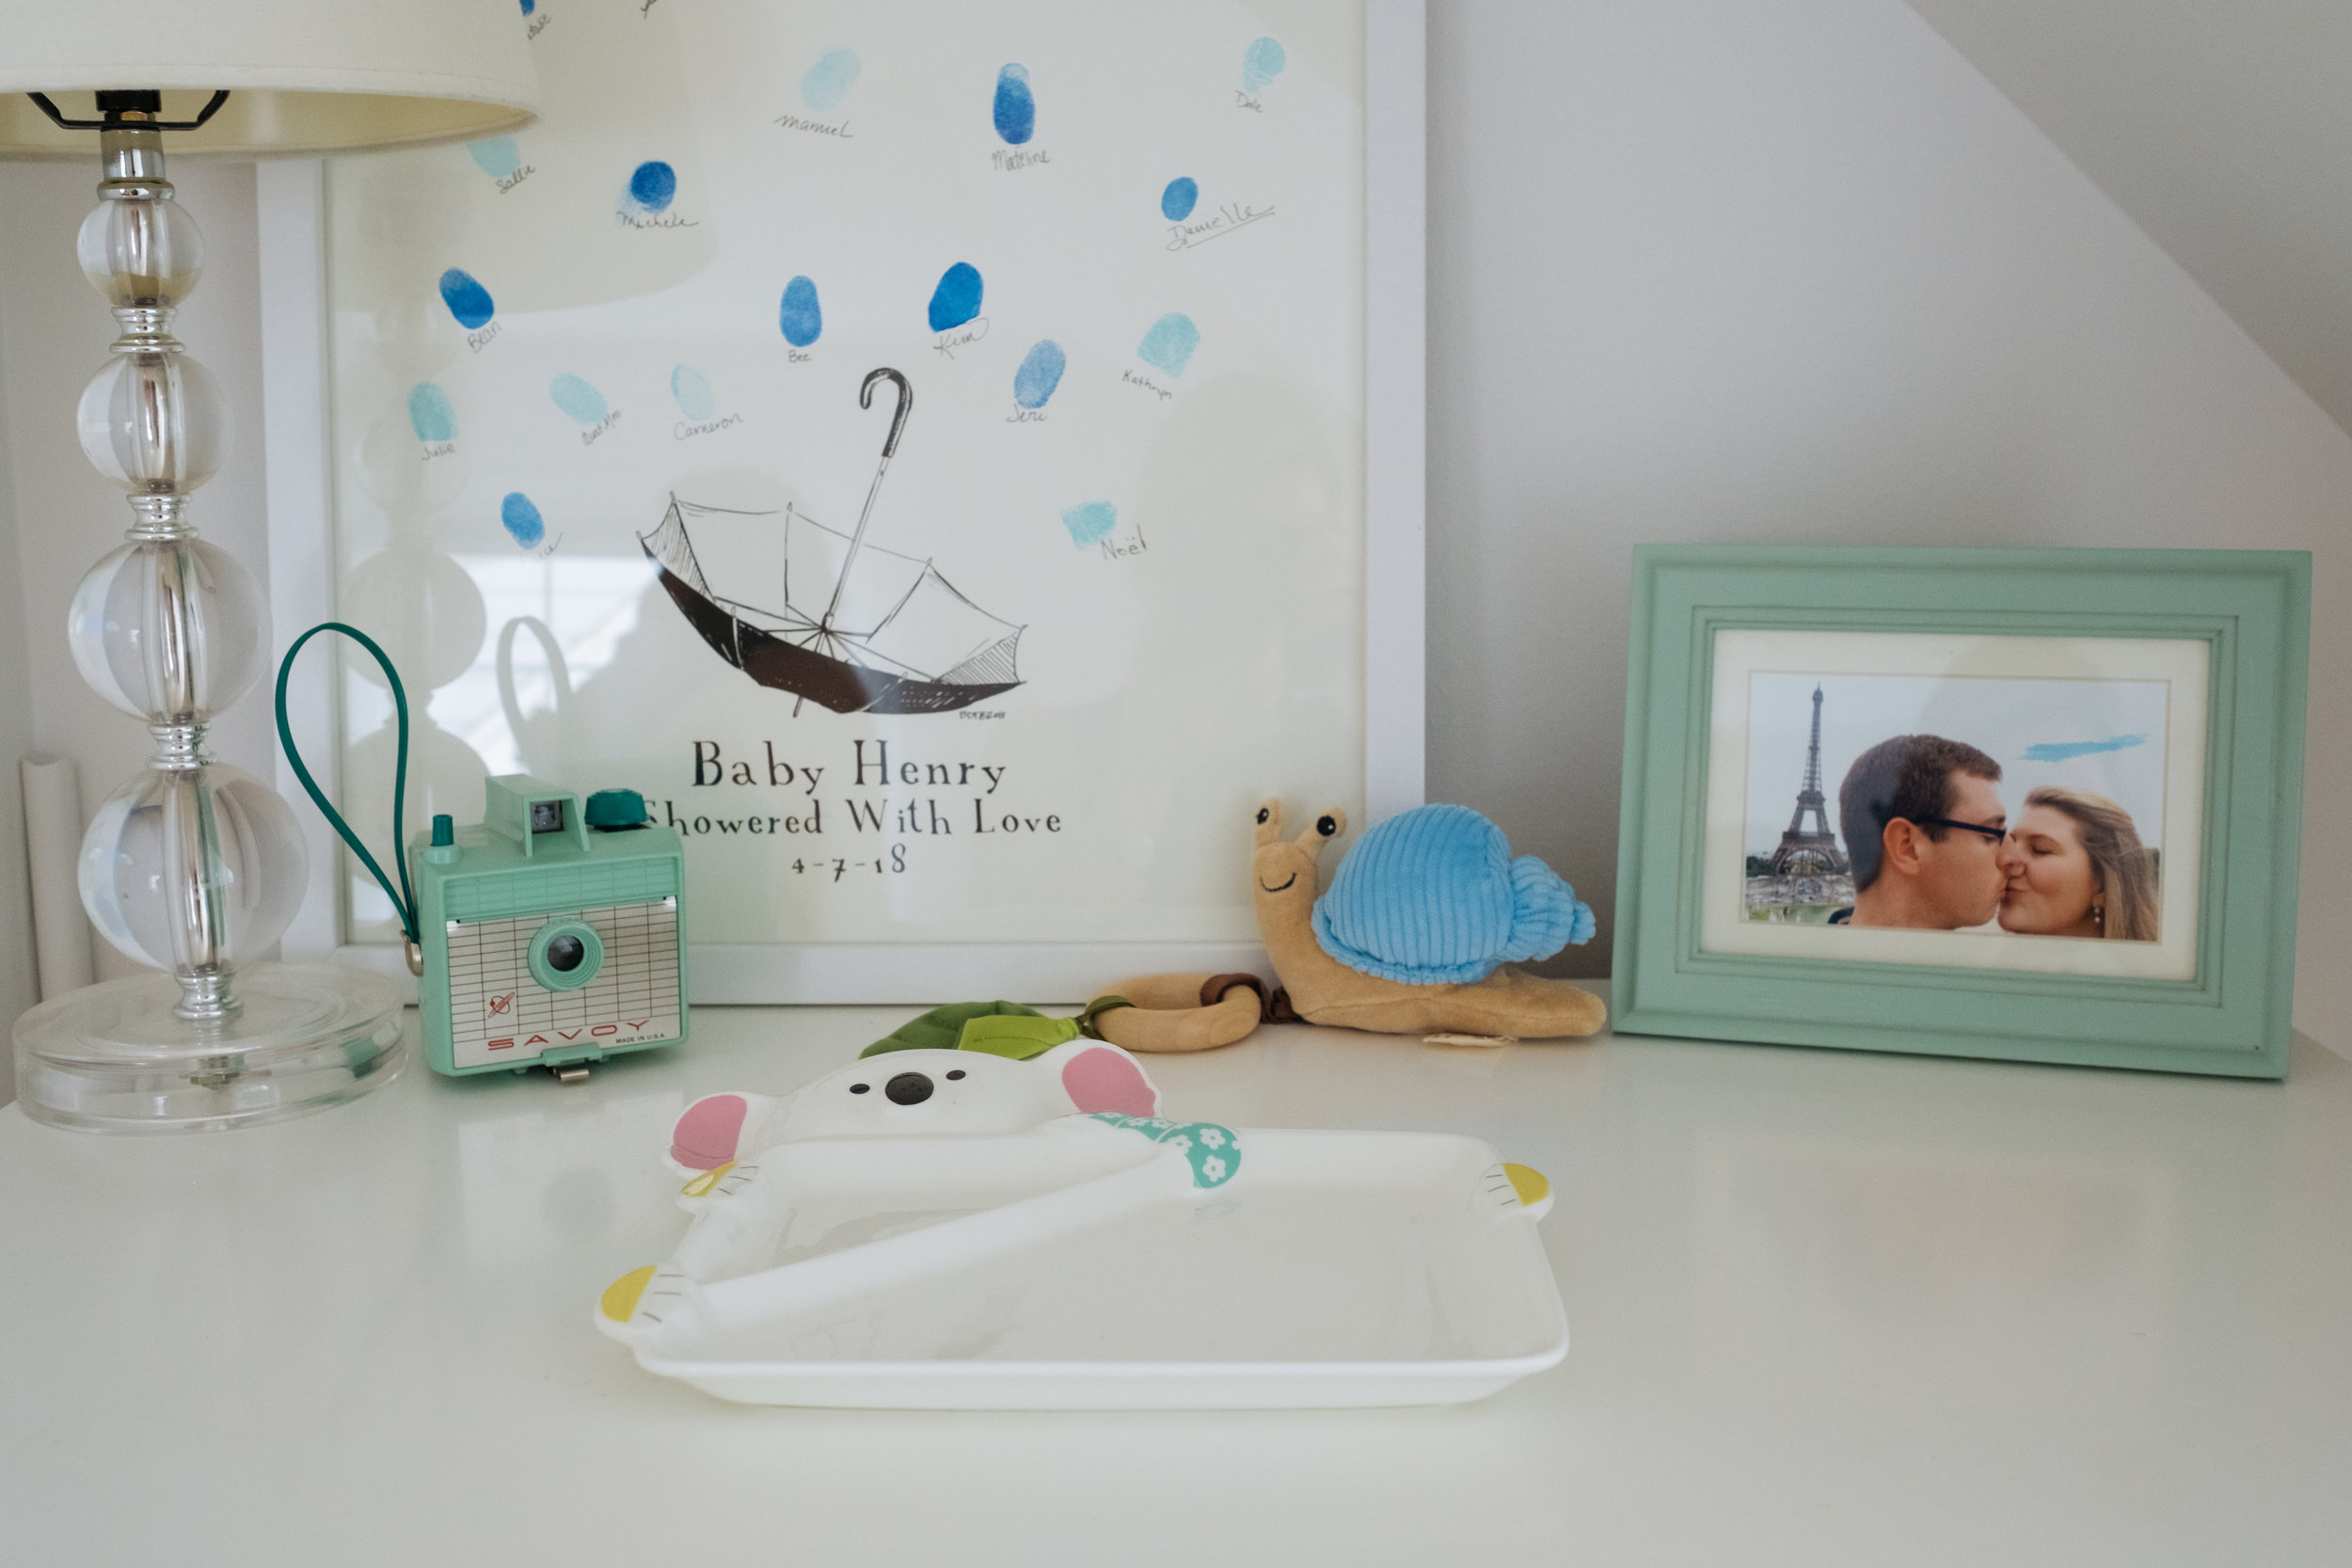 dresser display of special items and art in newborn nursery